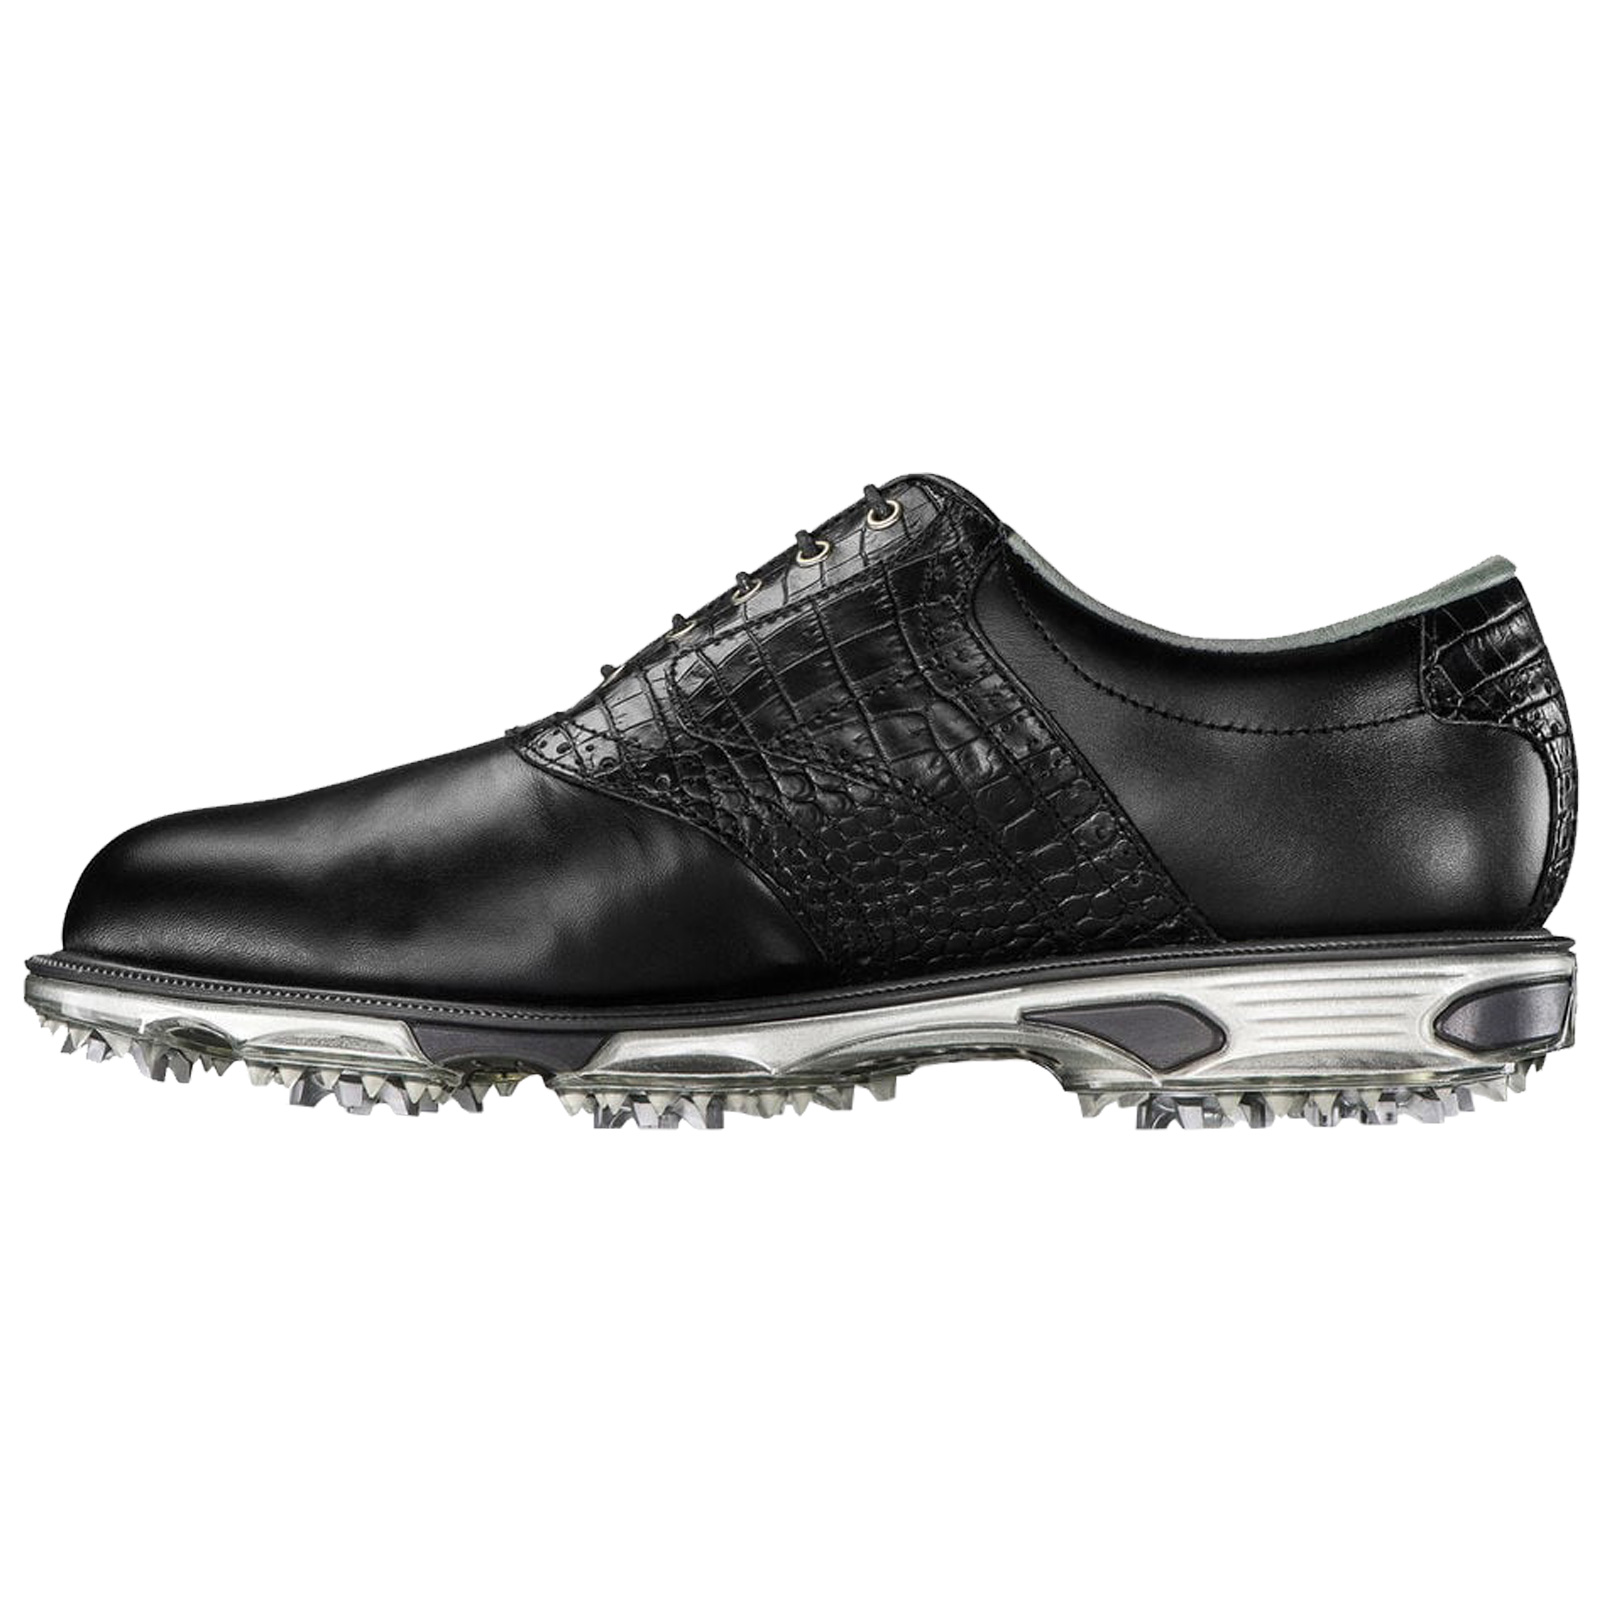 FootJoy Mens DryJoys Tour Golf Shoes - Waterproof Leather FJ Logo ...